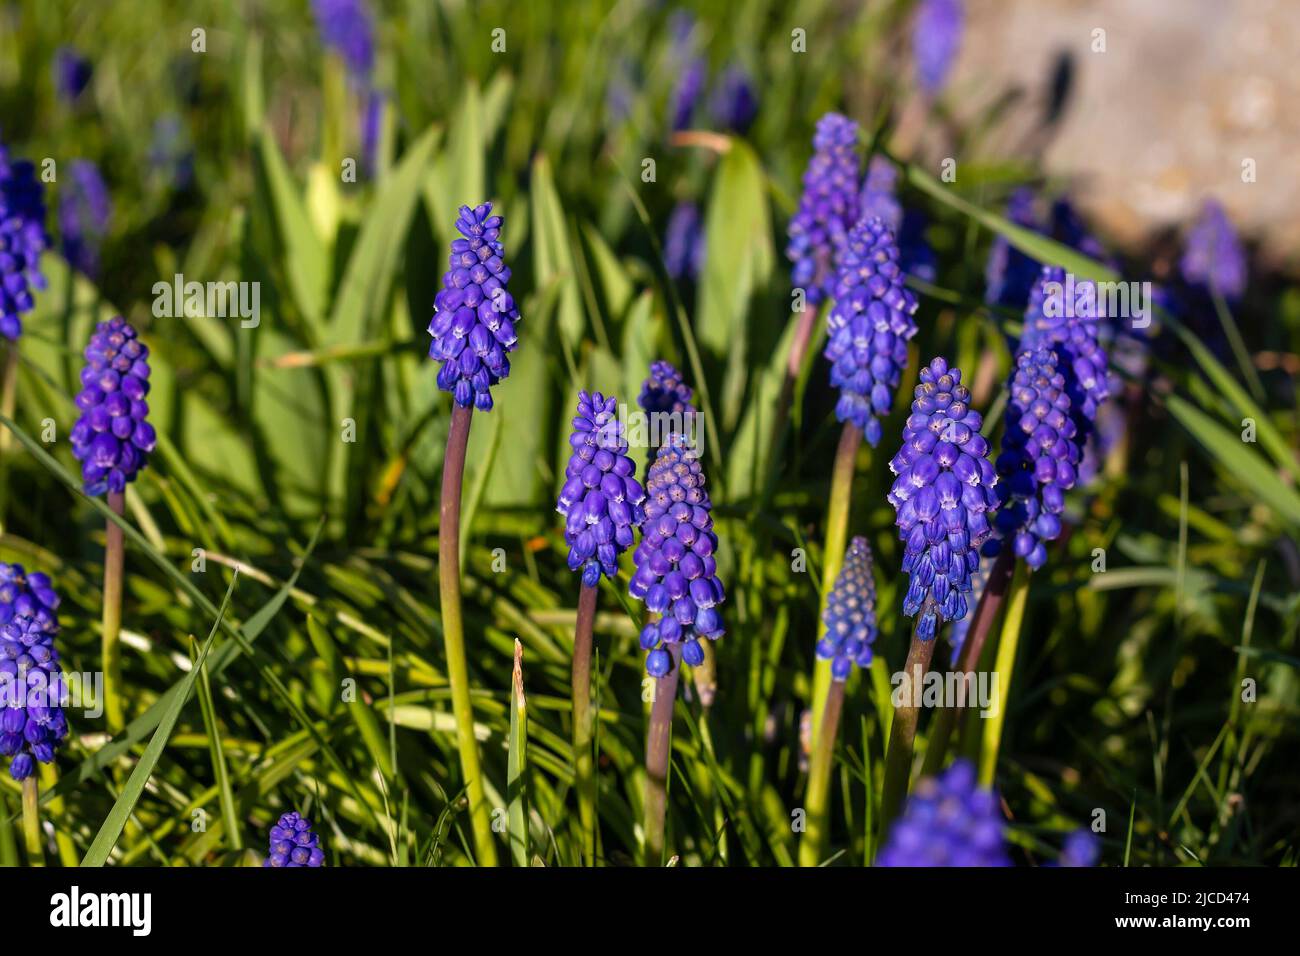 Grape hyacinth (Muscari neglectum) blue violet urn-shaped flowers Stock Photo